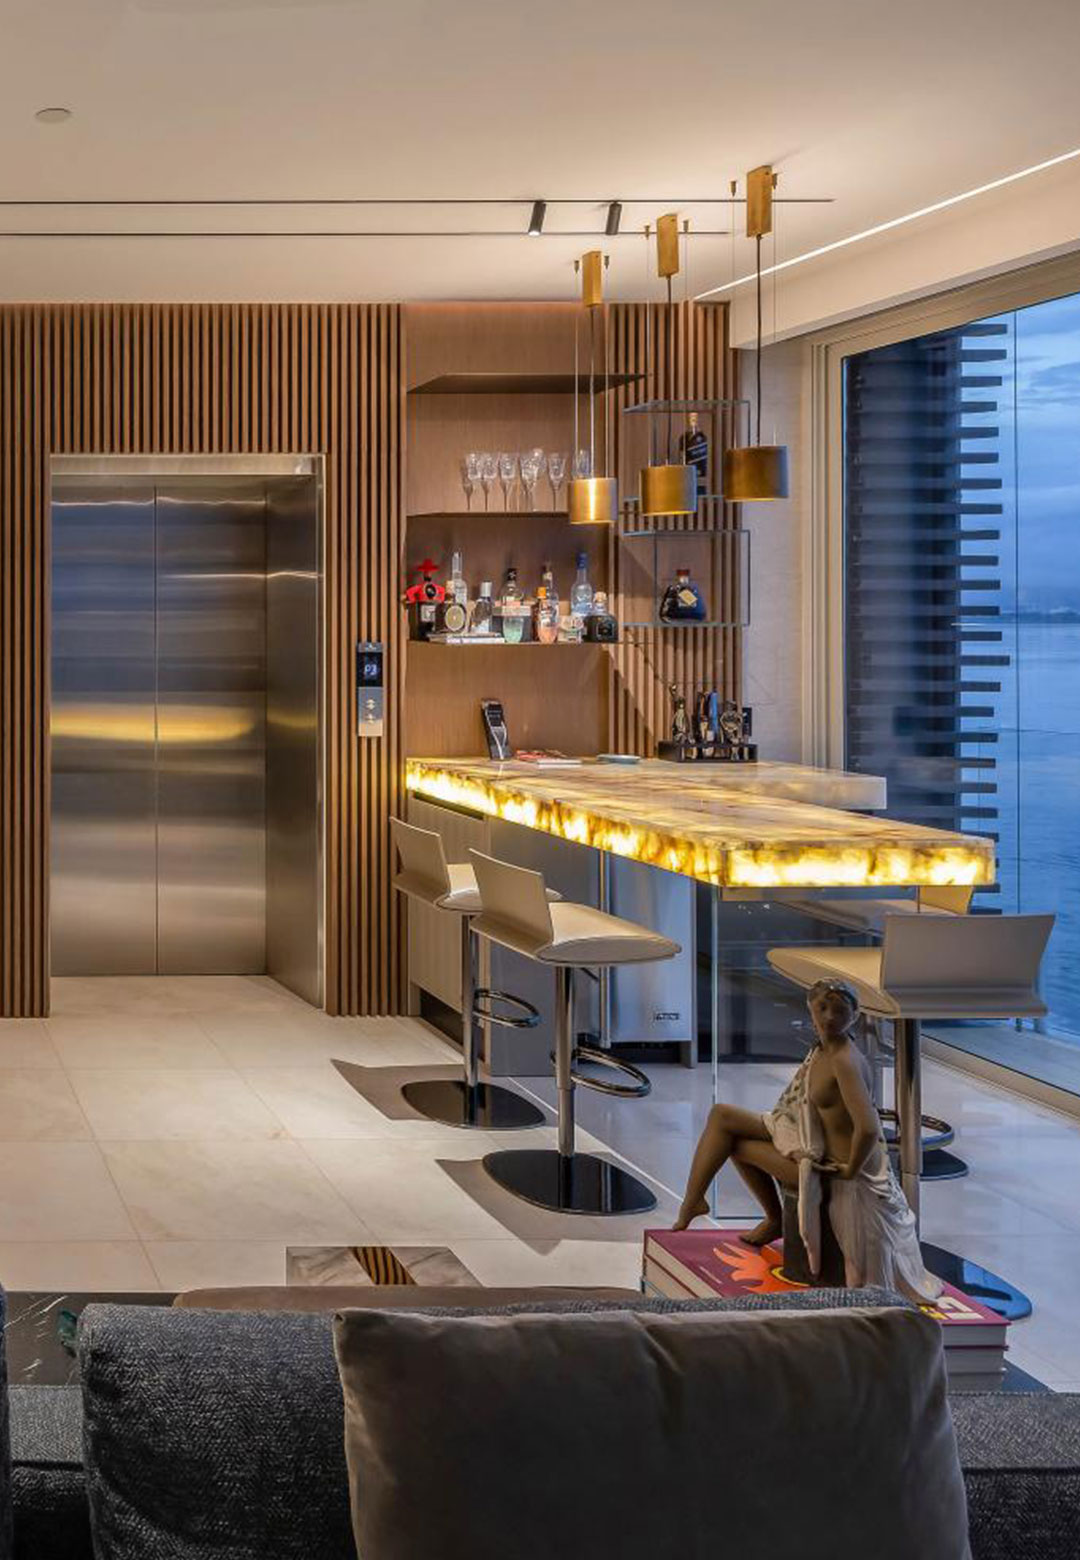 Laurameroni's custom bar designs inject luxurious hospitality into residences